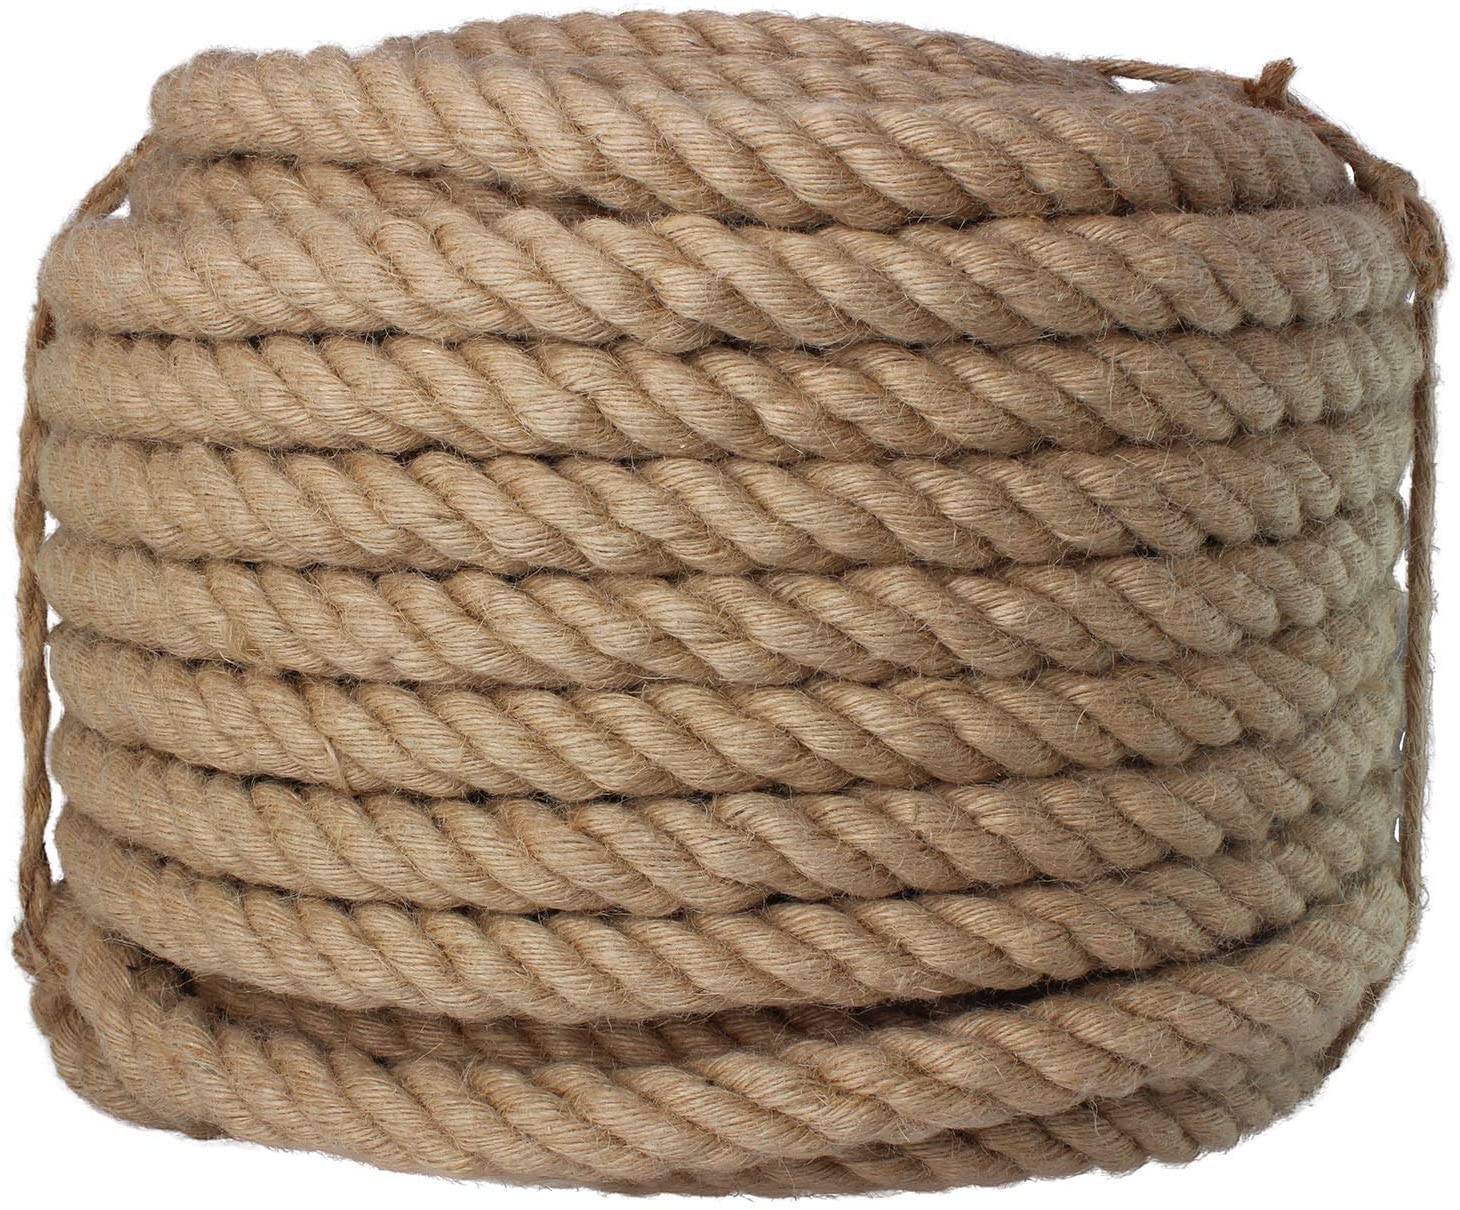 types of rope - manila